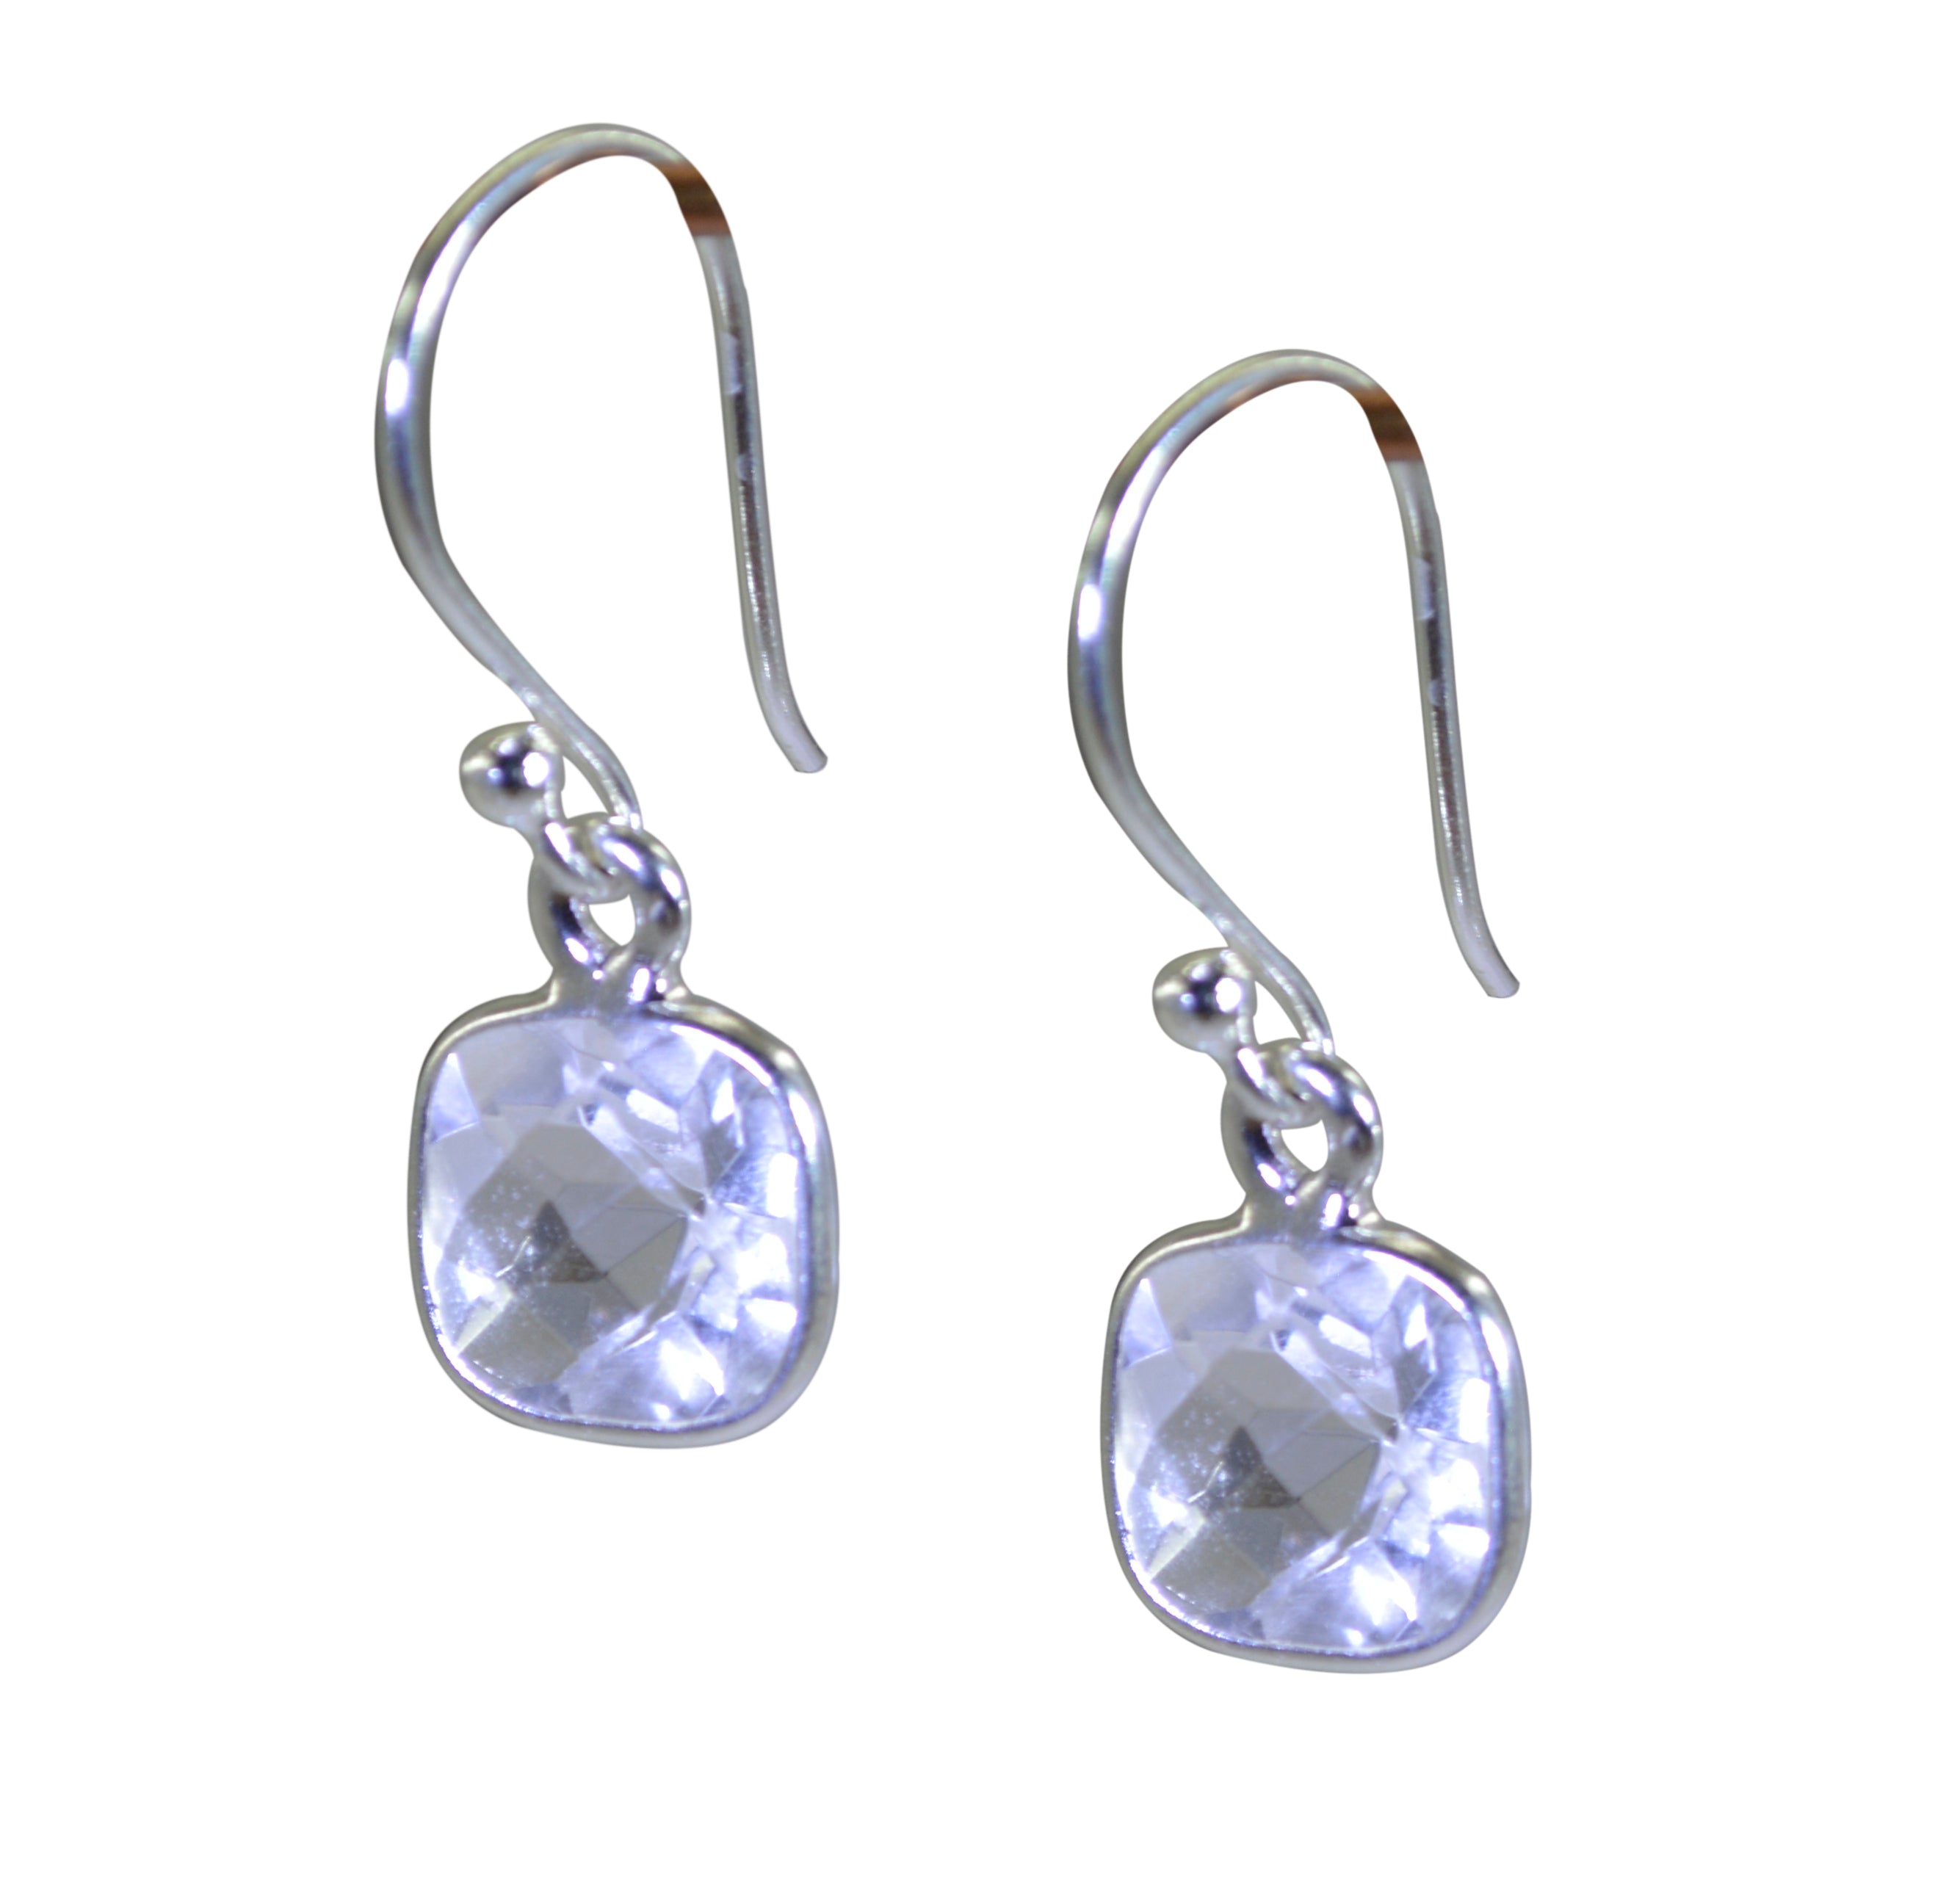 Riyo Good Gemstones Octogon Faceted White Crystal Quartz Silver Earrings st. patricks day gift